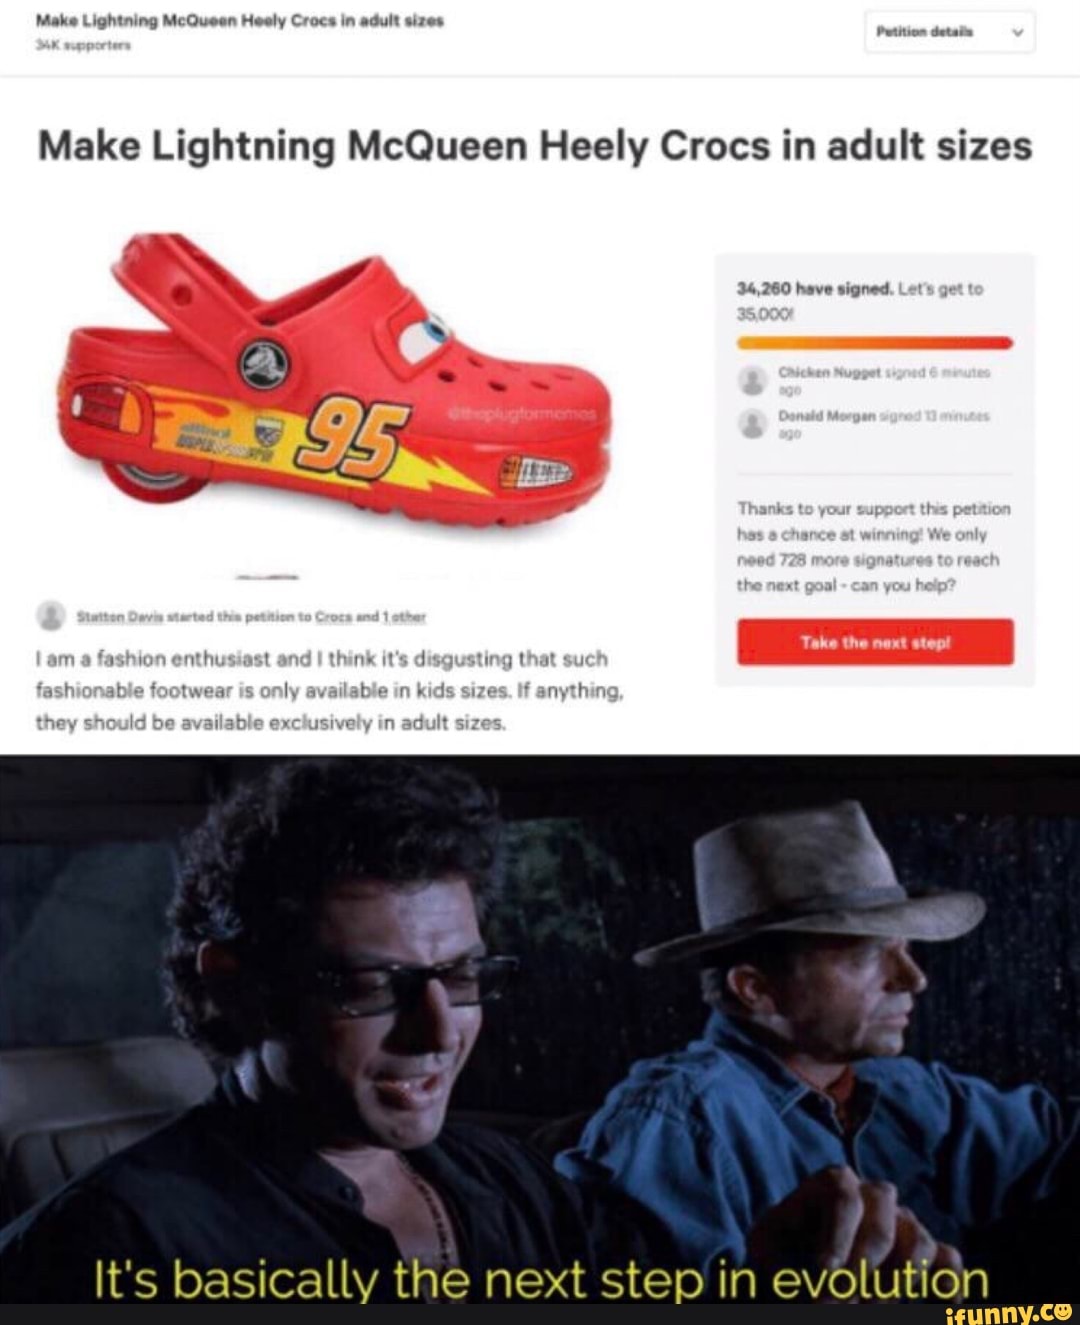 crocs with heelys